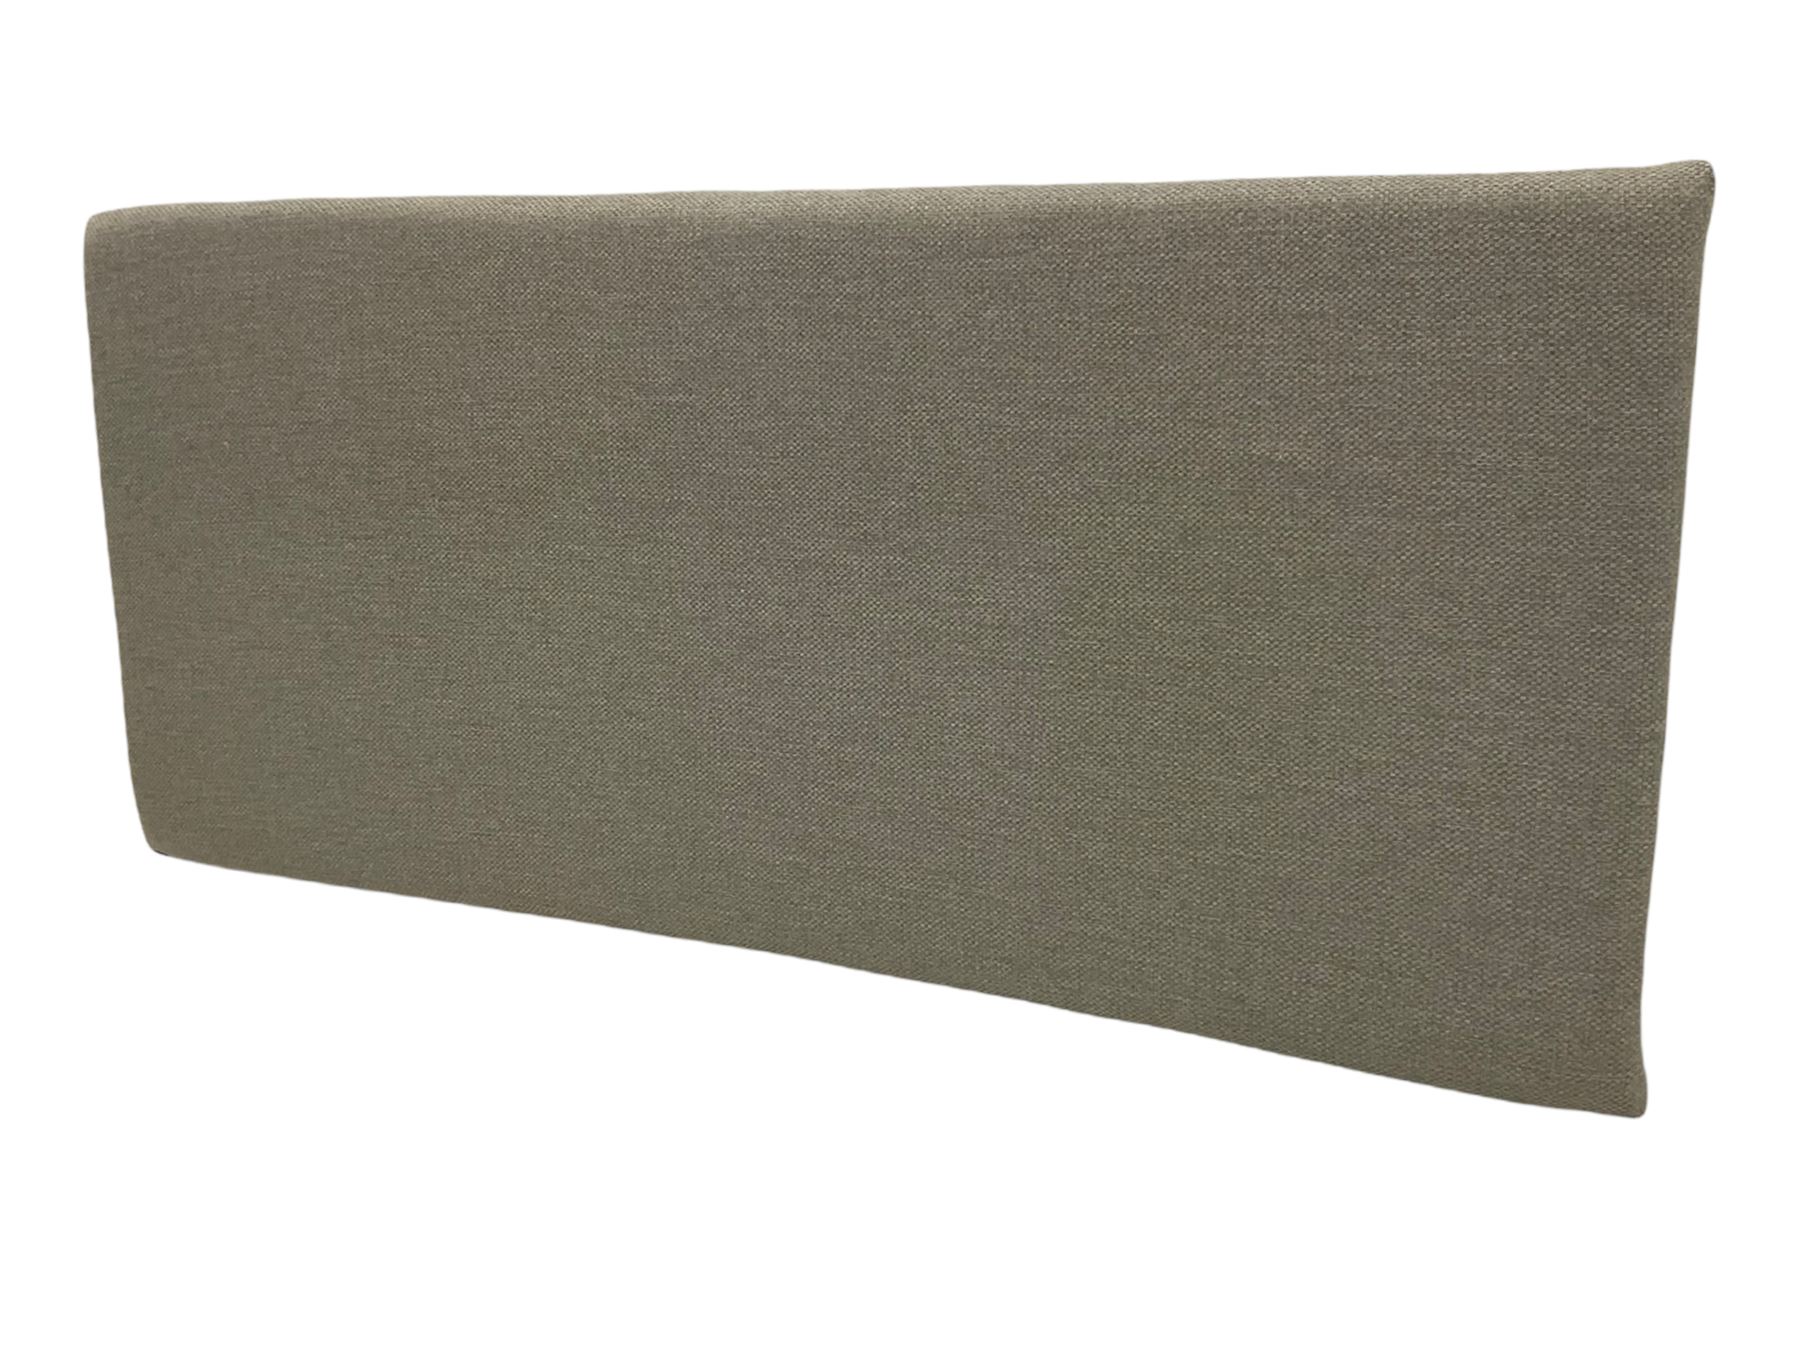 SuperKing 6' headboard upholstered in Warwick moon grey fabric - Image 4 of 5